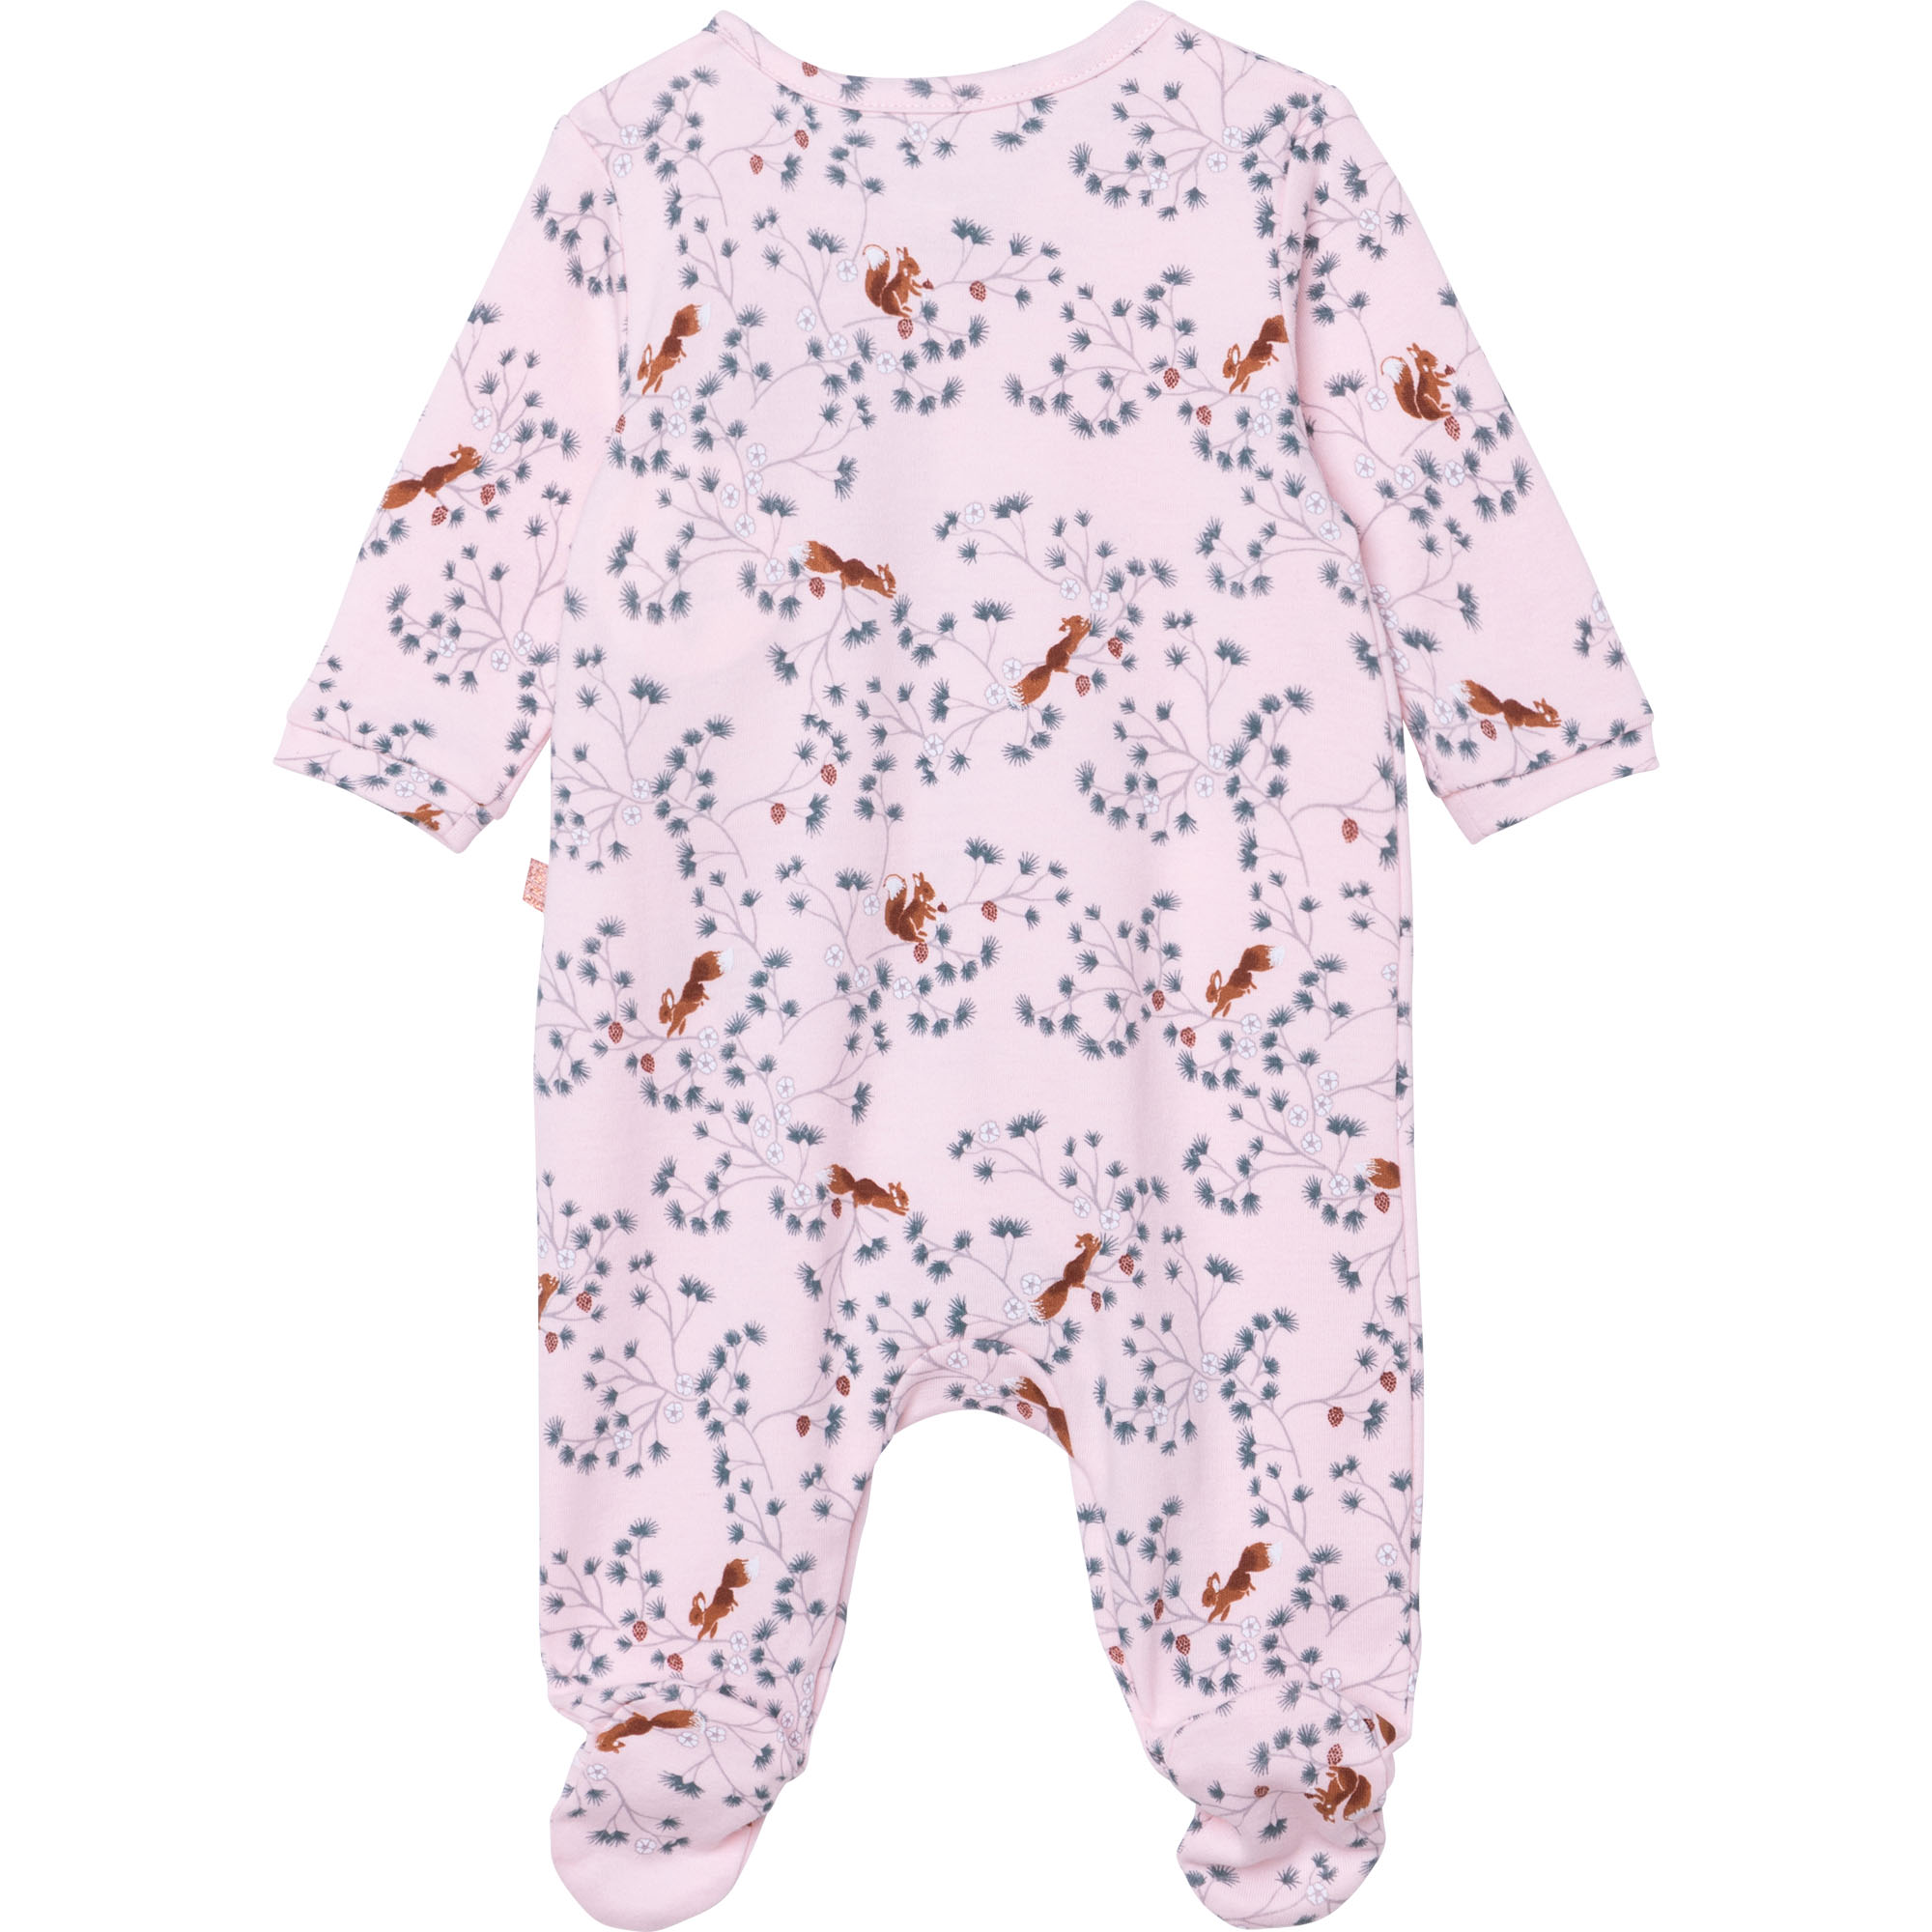 Printed cotton pyjamas CARREMENT BEAU for GIRL